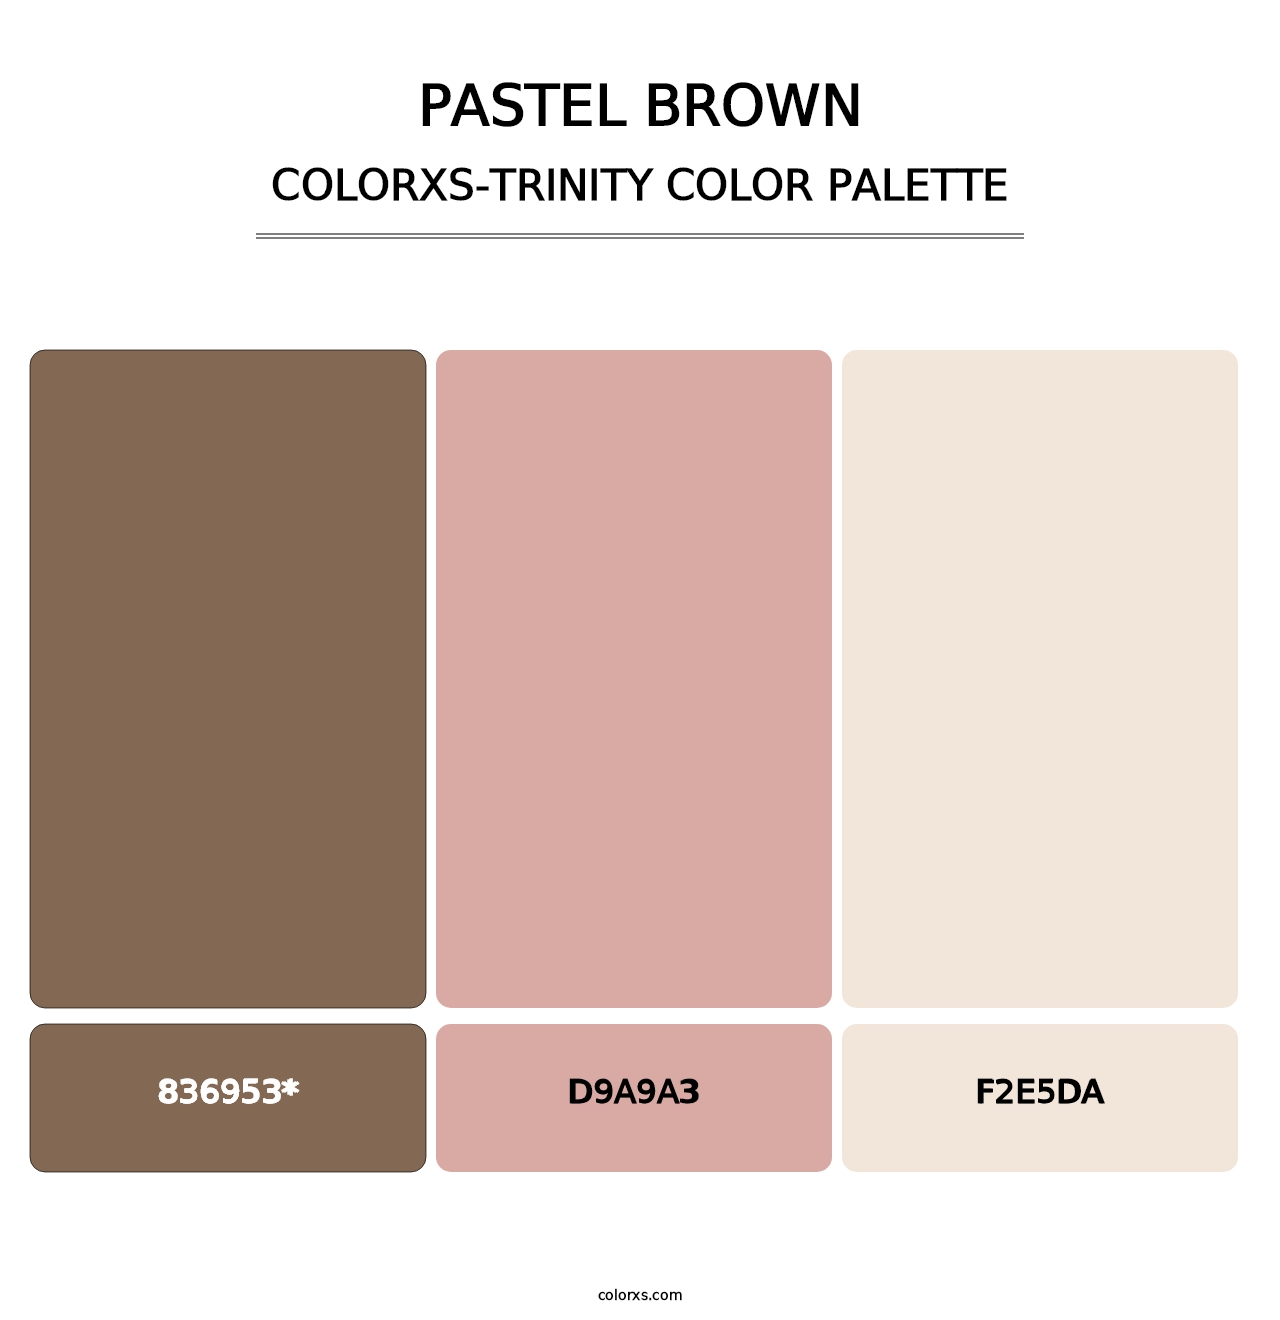 Pastel Brown - Colorxs Trinity Palette